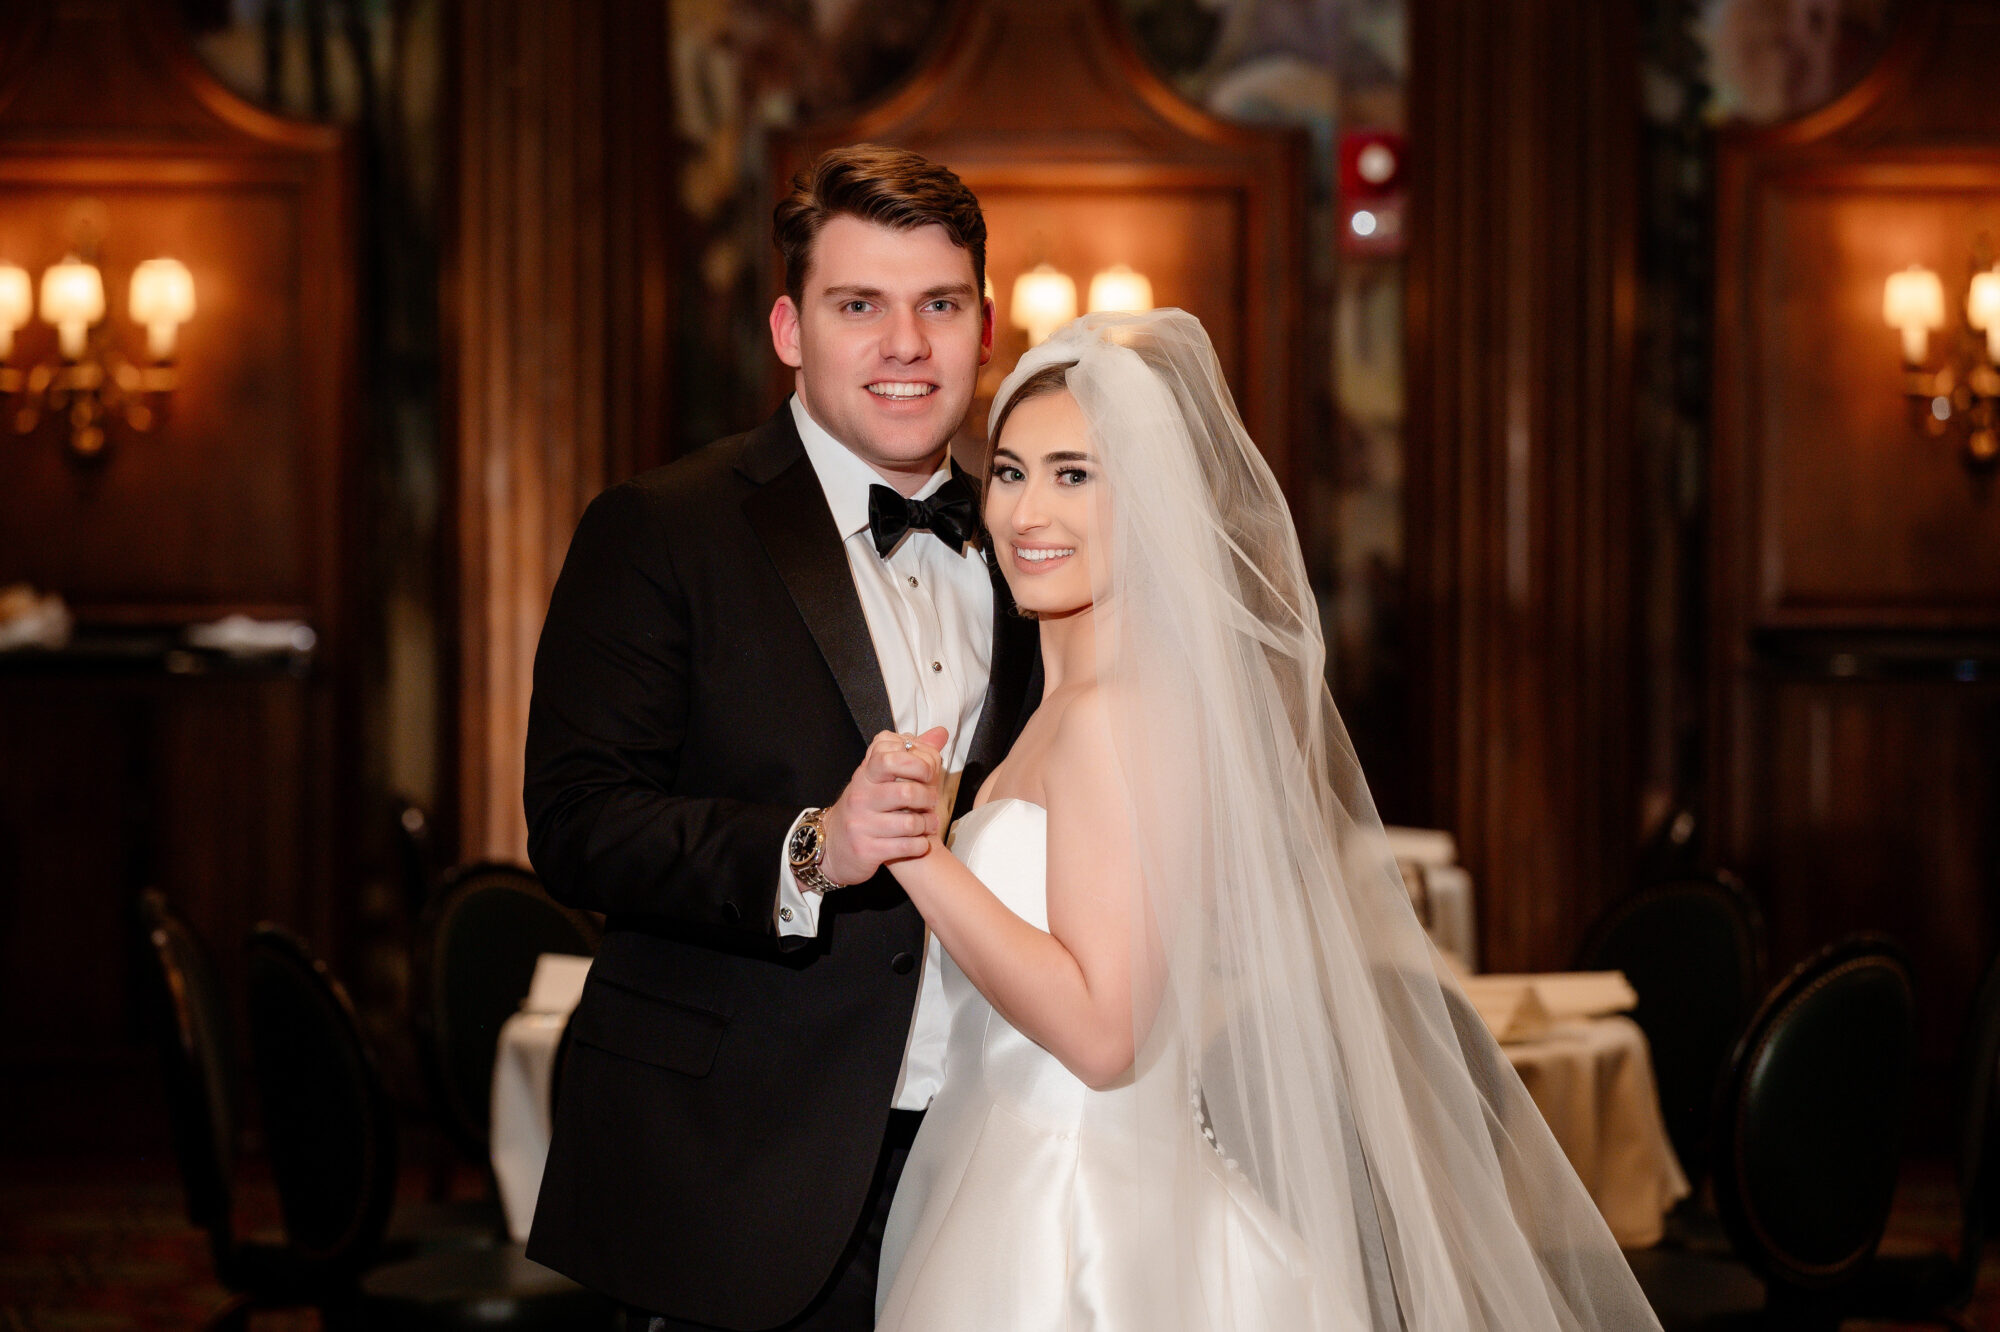 Duquesne Club wedding couple • Stunning Duquesne Club Wedding Photos - An Elegant Wintery January Pittsburgh Marriage